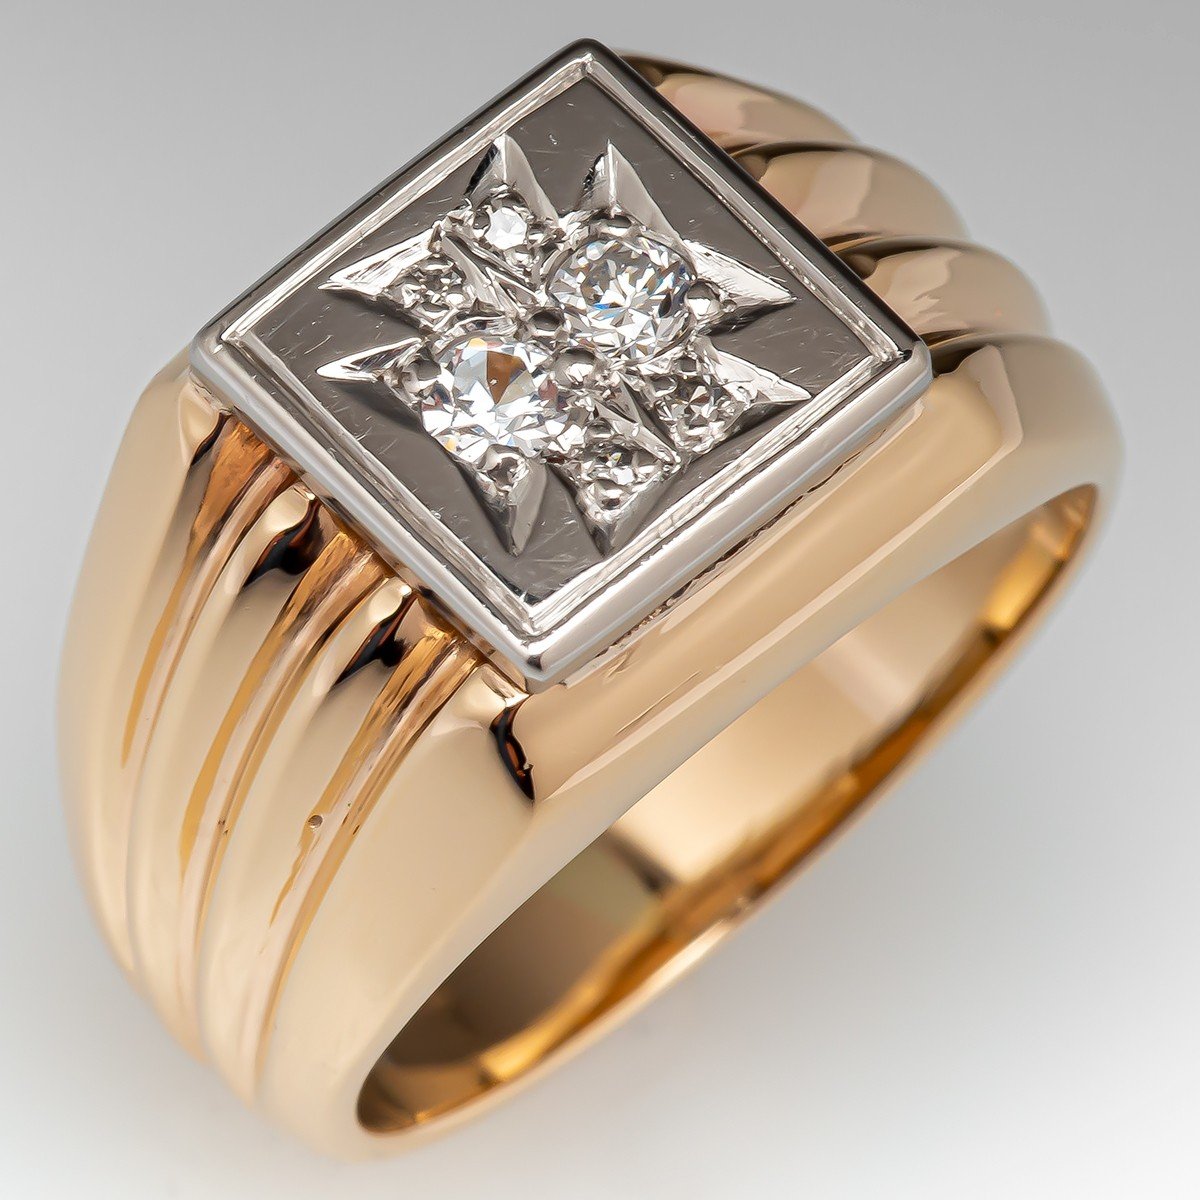 Circa 1940's Mens Vintage Pinky Ring w/ Transitional Cut Diamonds 14K Gold